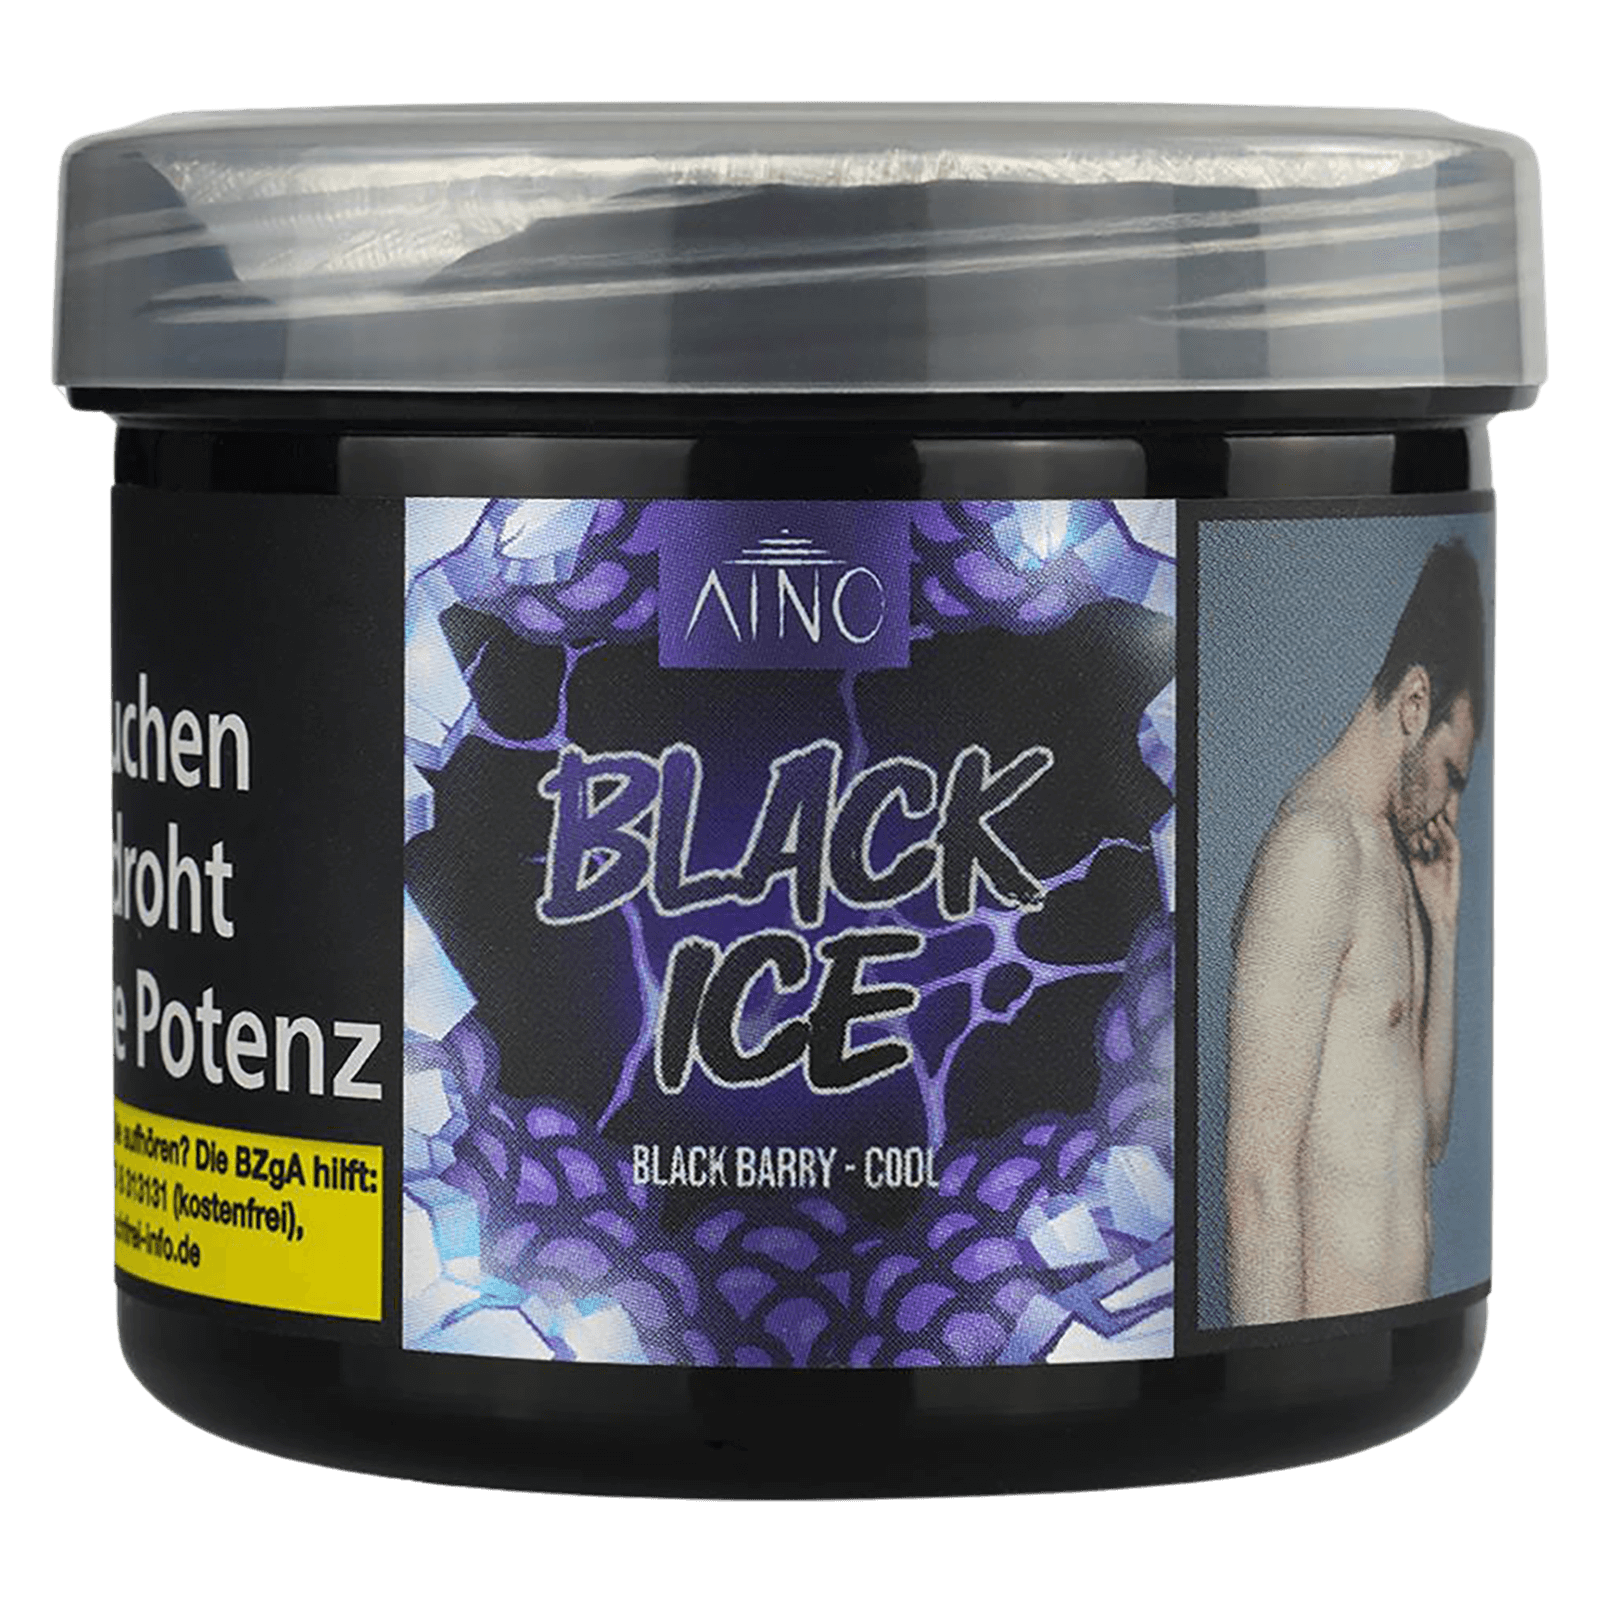 AINO Tobacco 20g - Black Ice